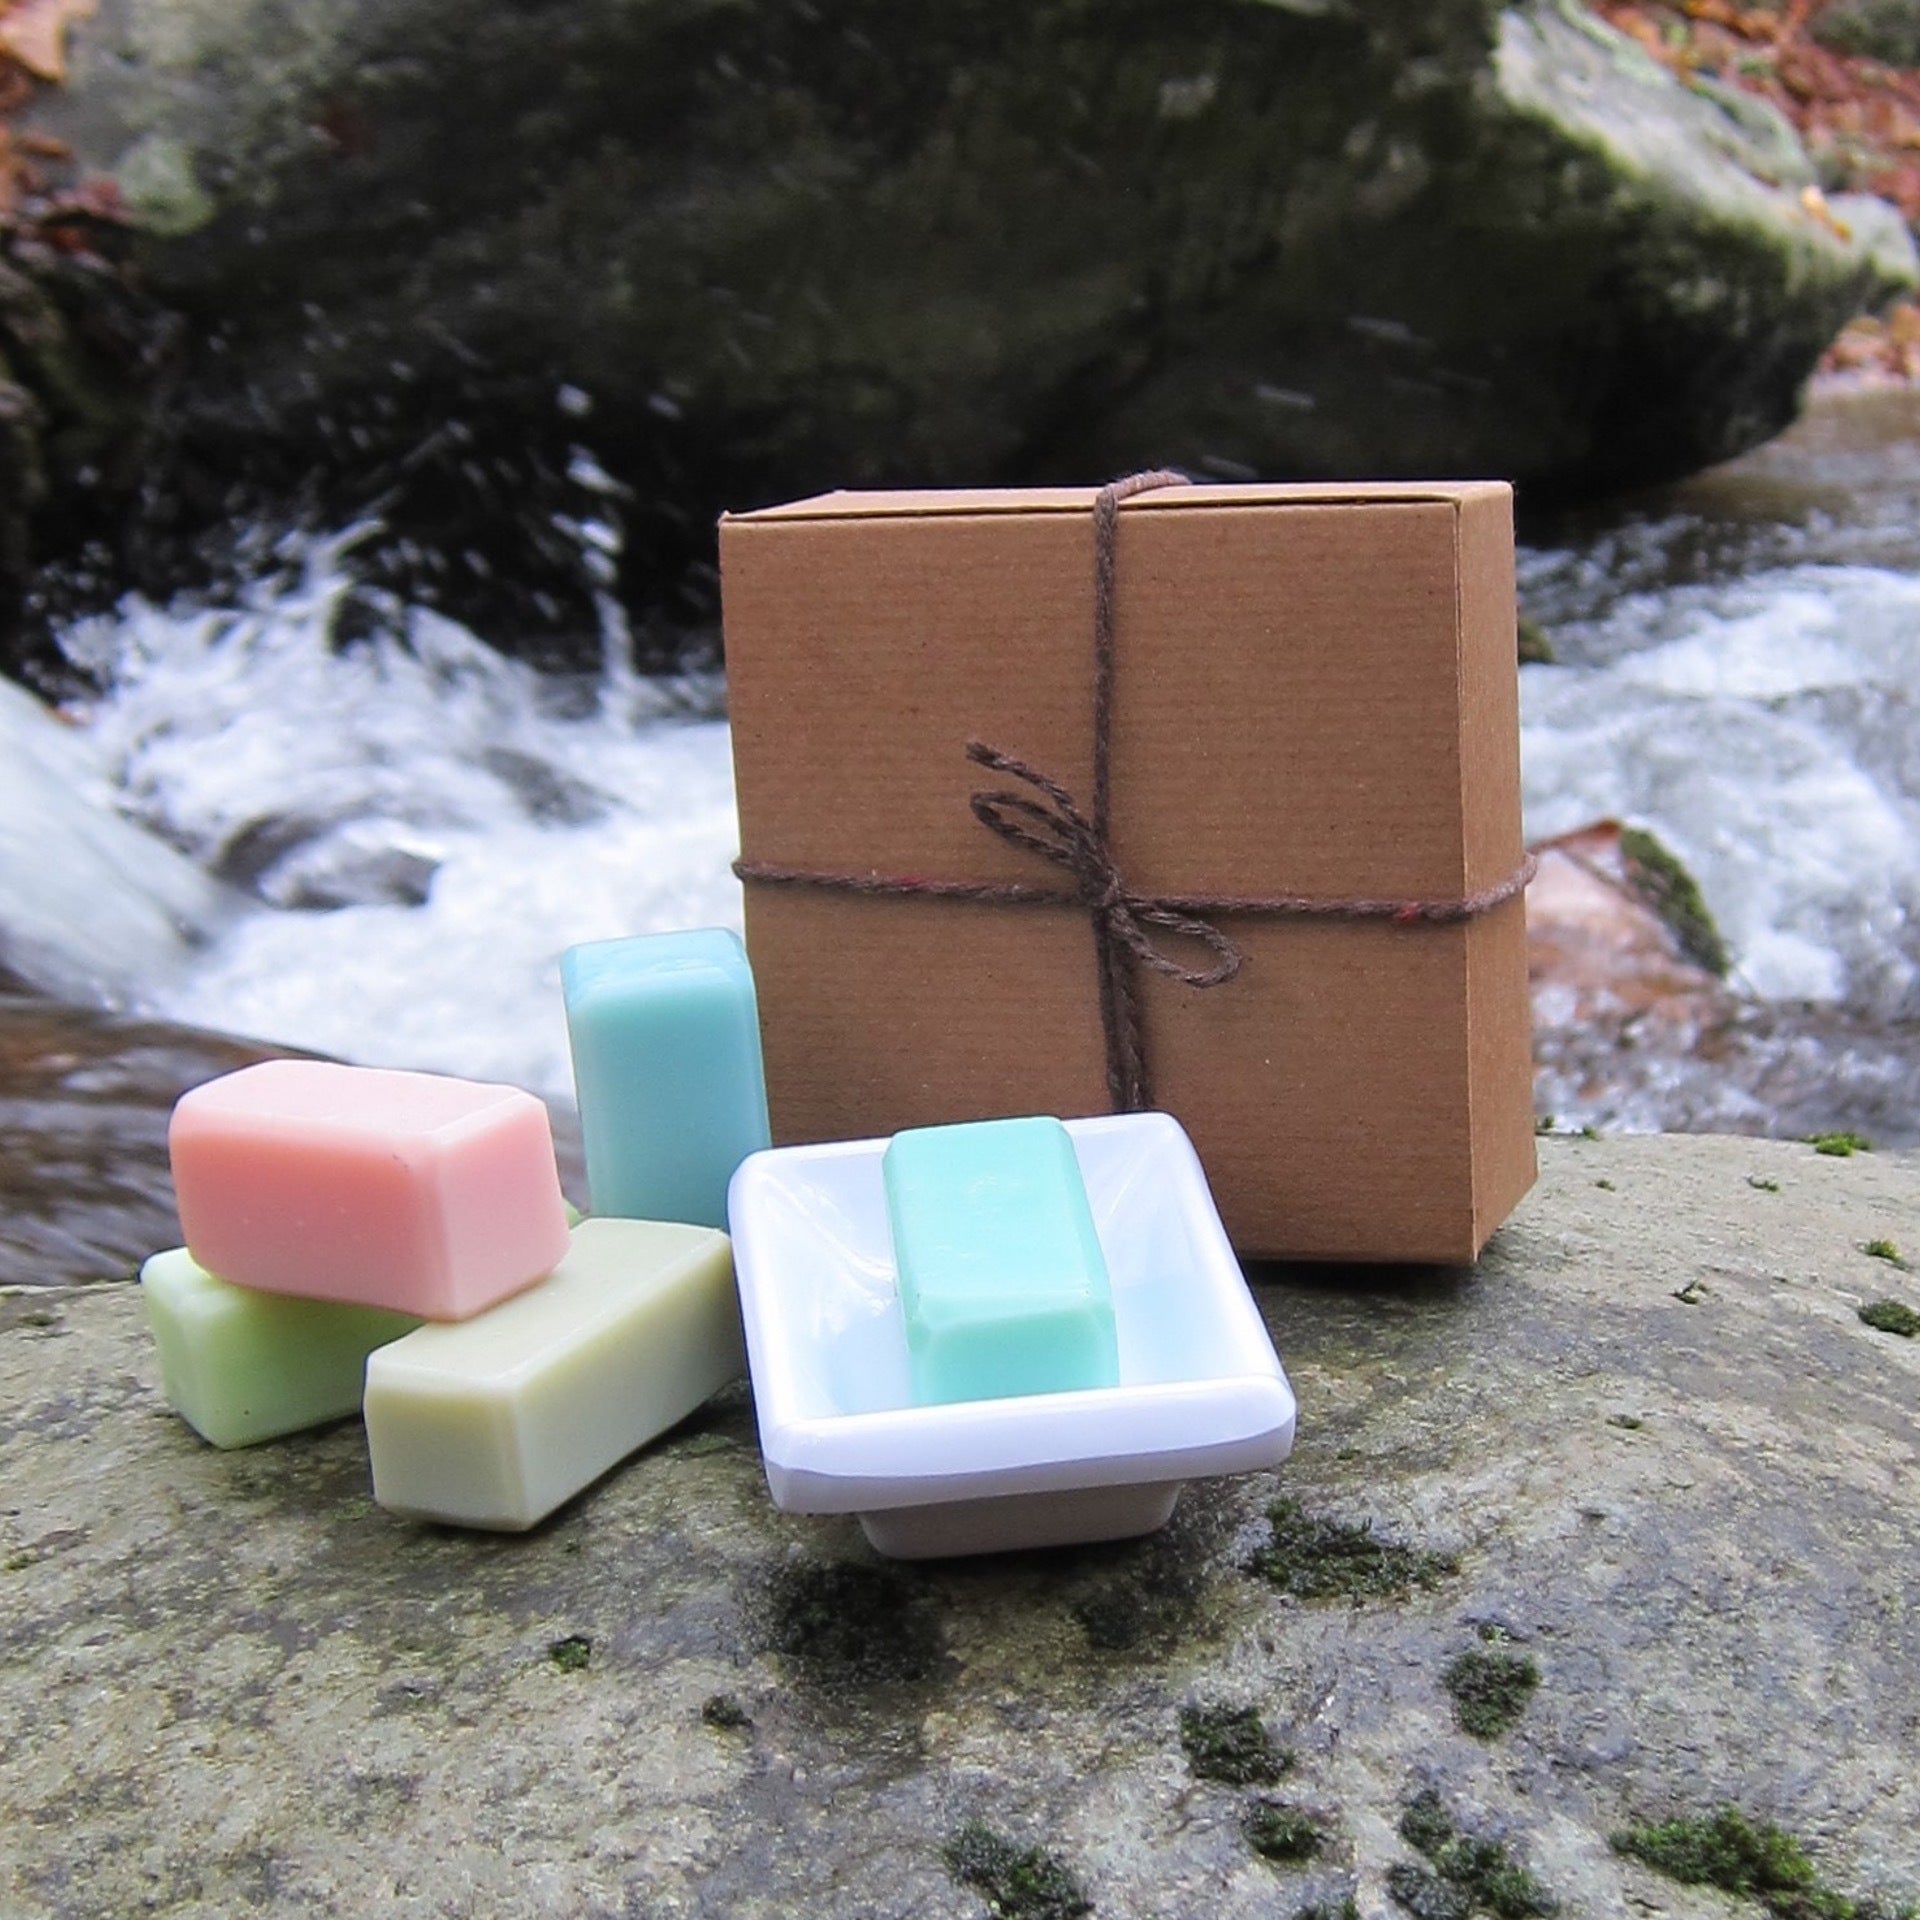 Soap, 3 Bars of Handmade Soap, Bar Soap, Vegan Soap, Homemade Natural Soap.  